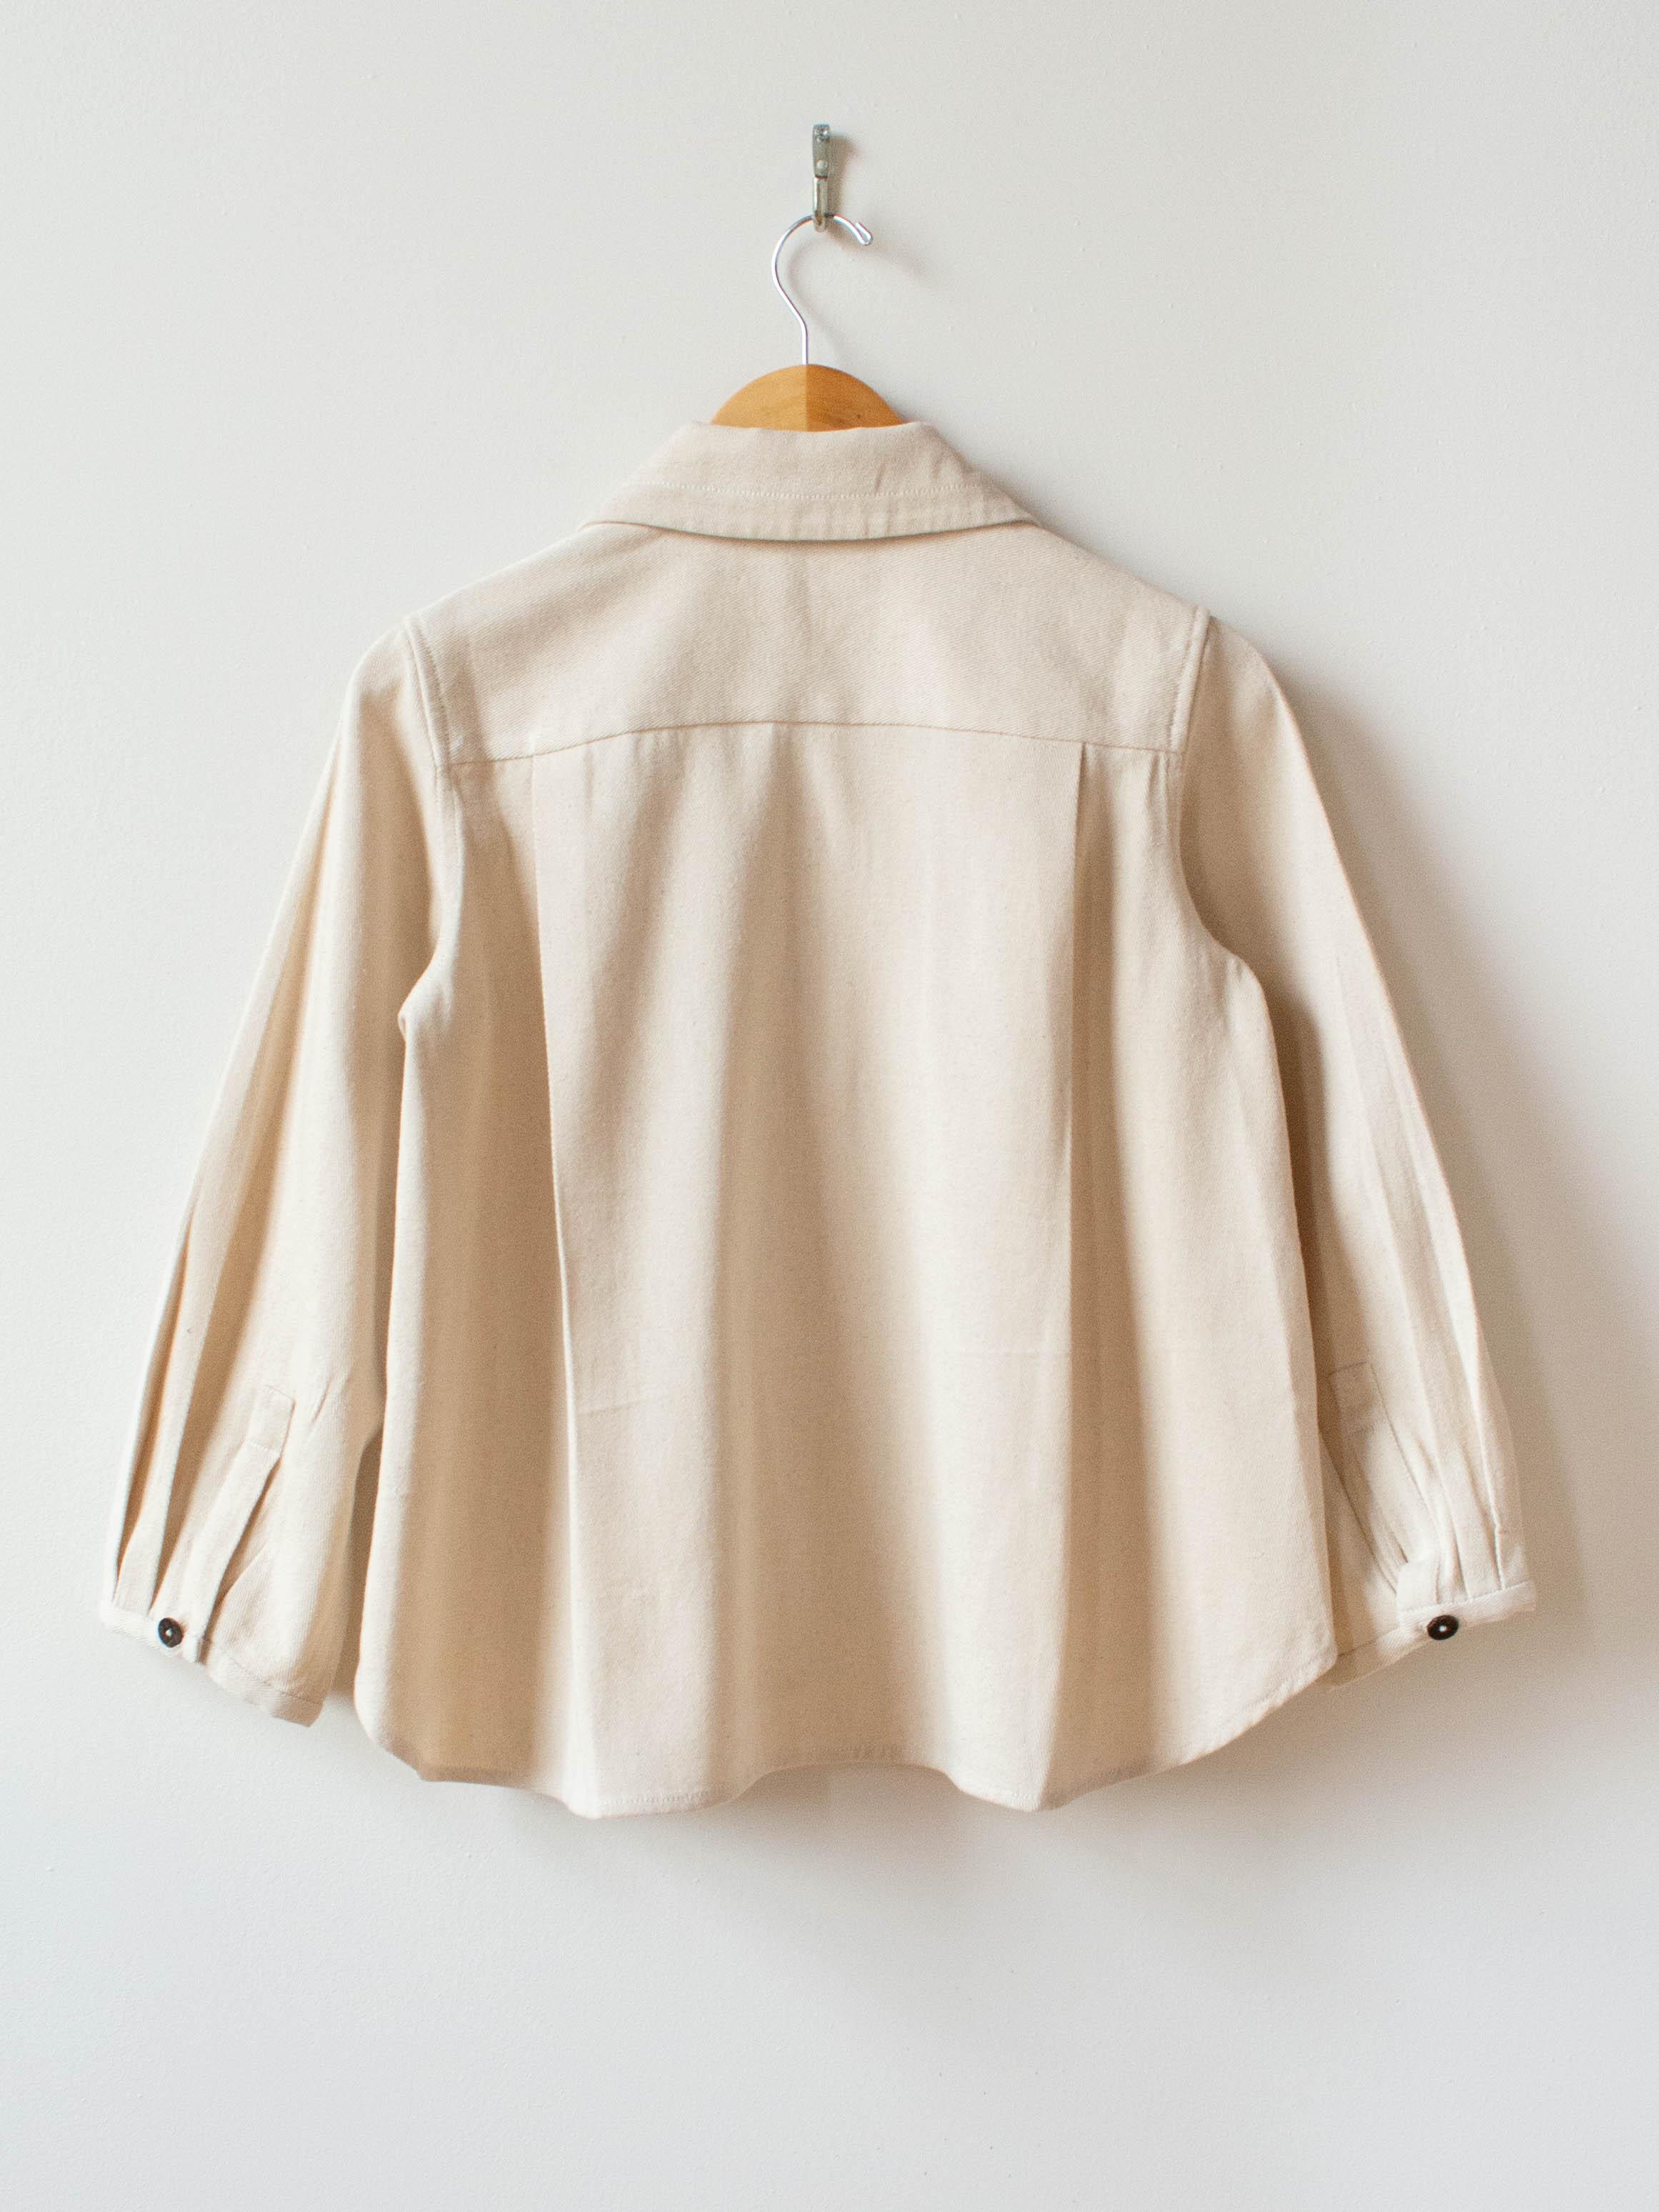 Namu Shop - Jan Machenhauer Kelly Shirt Jacket - Natural Cotton Twill